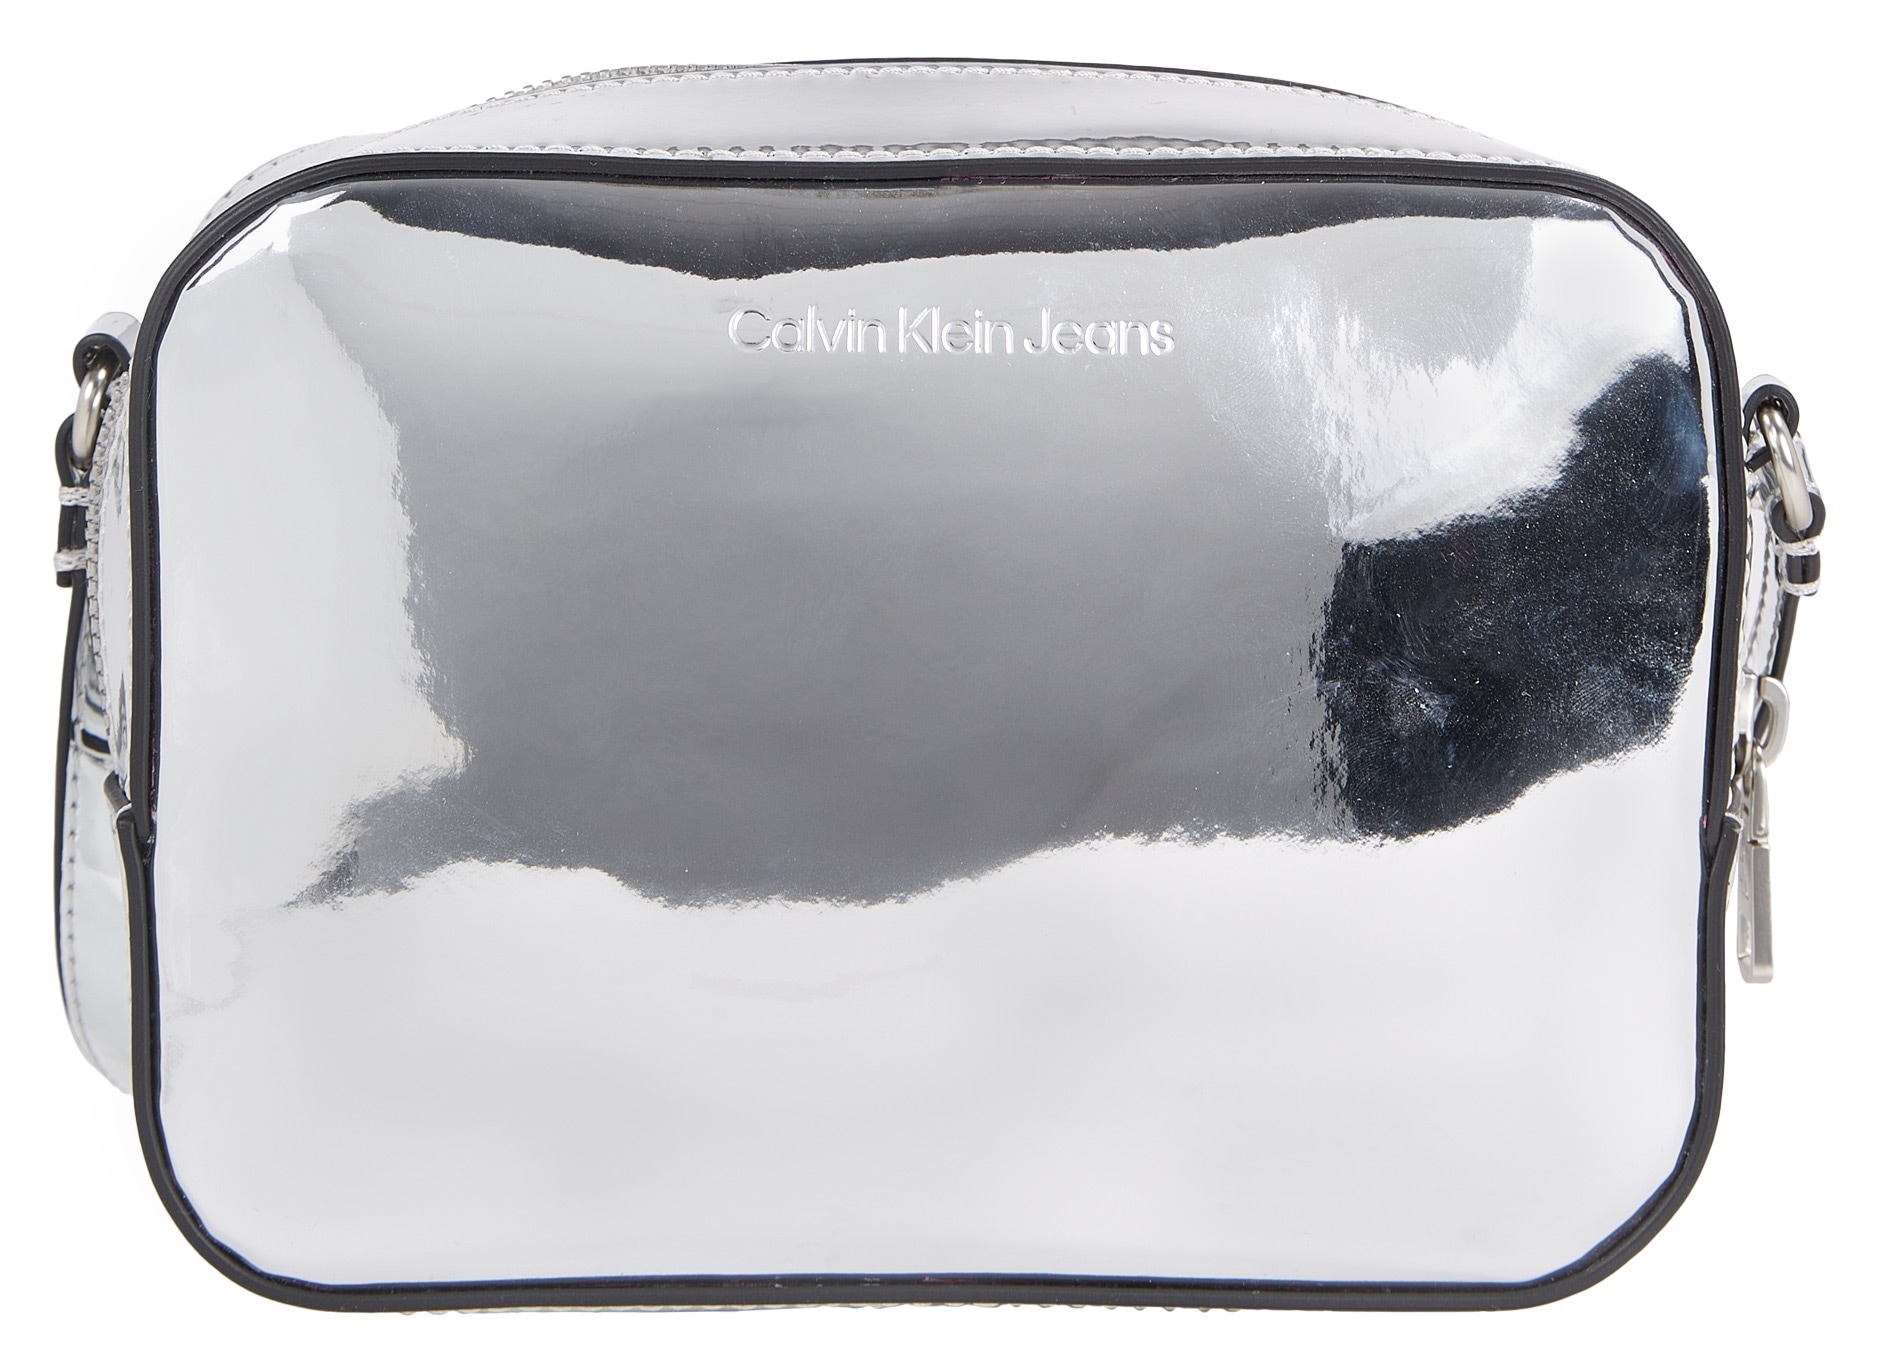 Calvin Klein Jeans Mini Bag »SCULPTED CAMERA BAG18 MONO S«, in angesagter Mirror-Metallic Optik